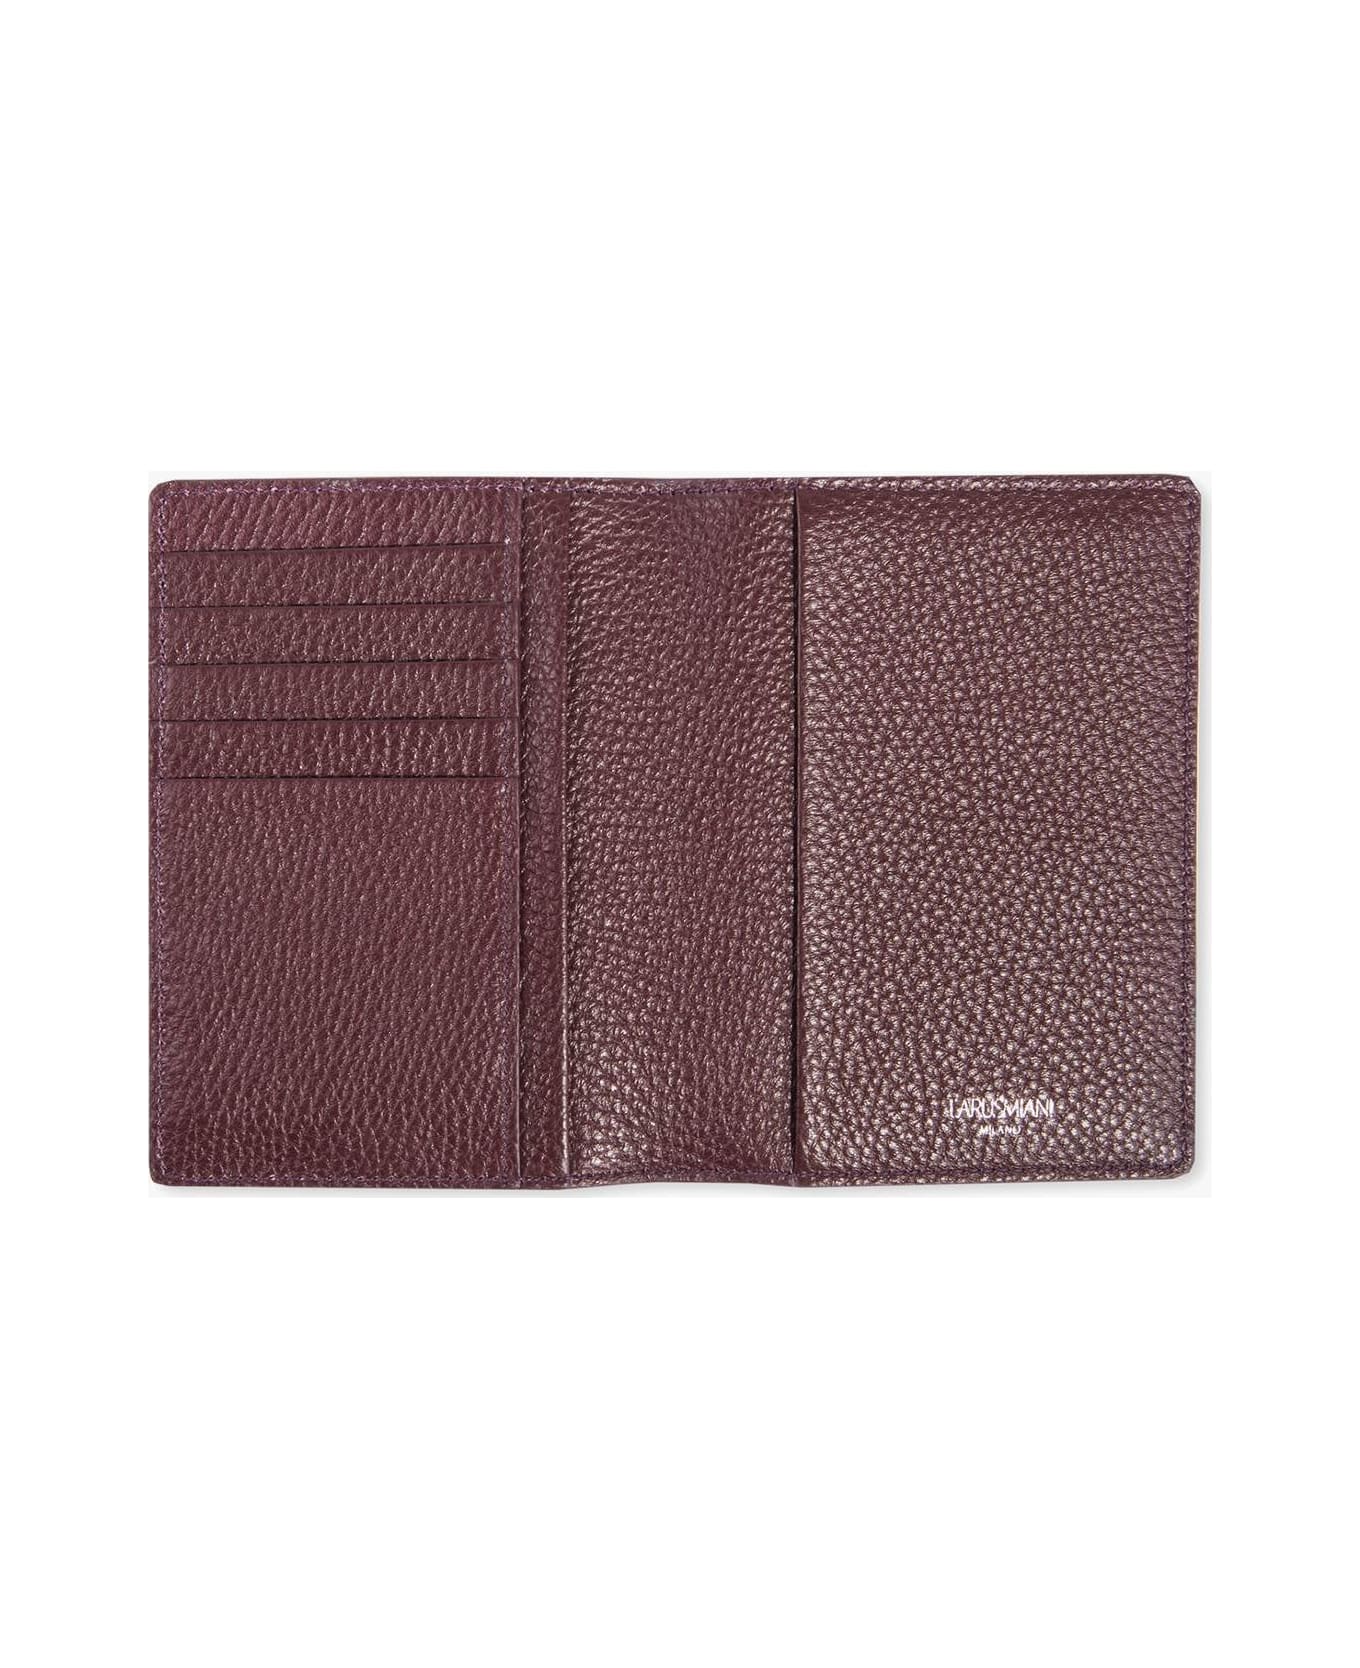 Larusmiani Passport Cover 'fiumicino' Wallet - DarkRed 財布